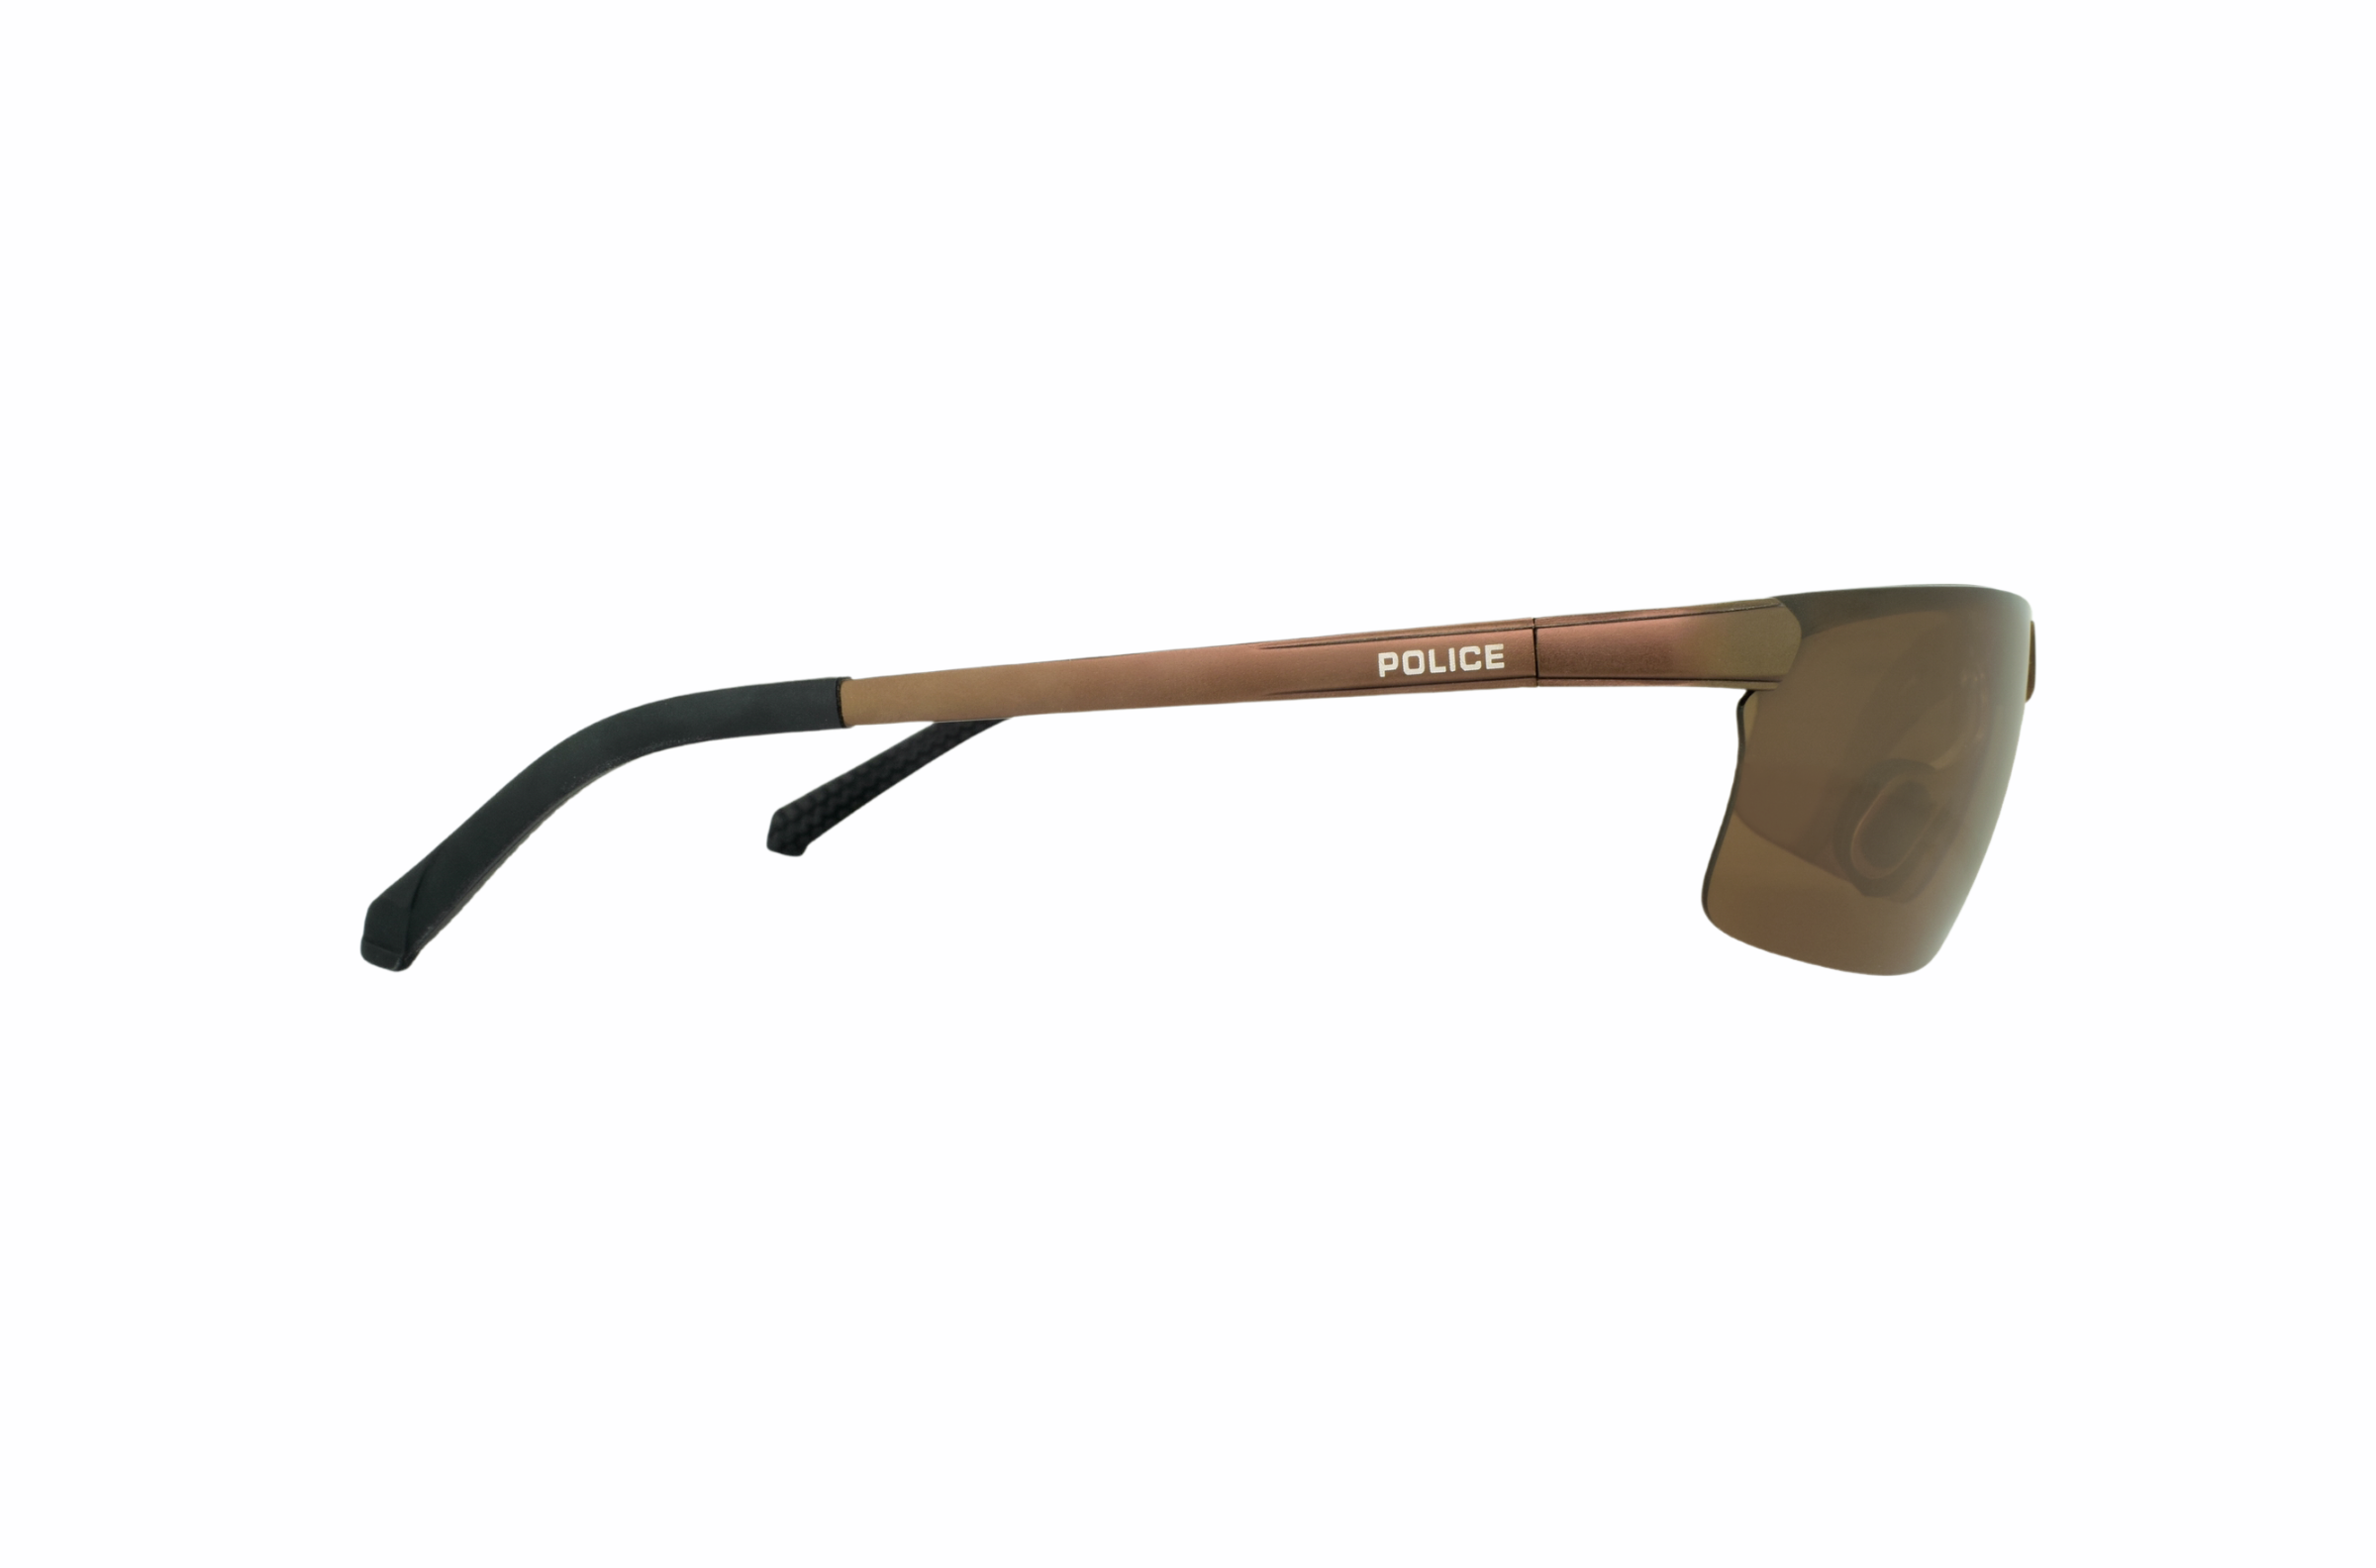 Polarized Sports Sunglasses For Men